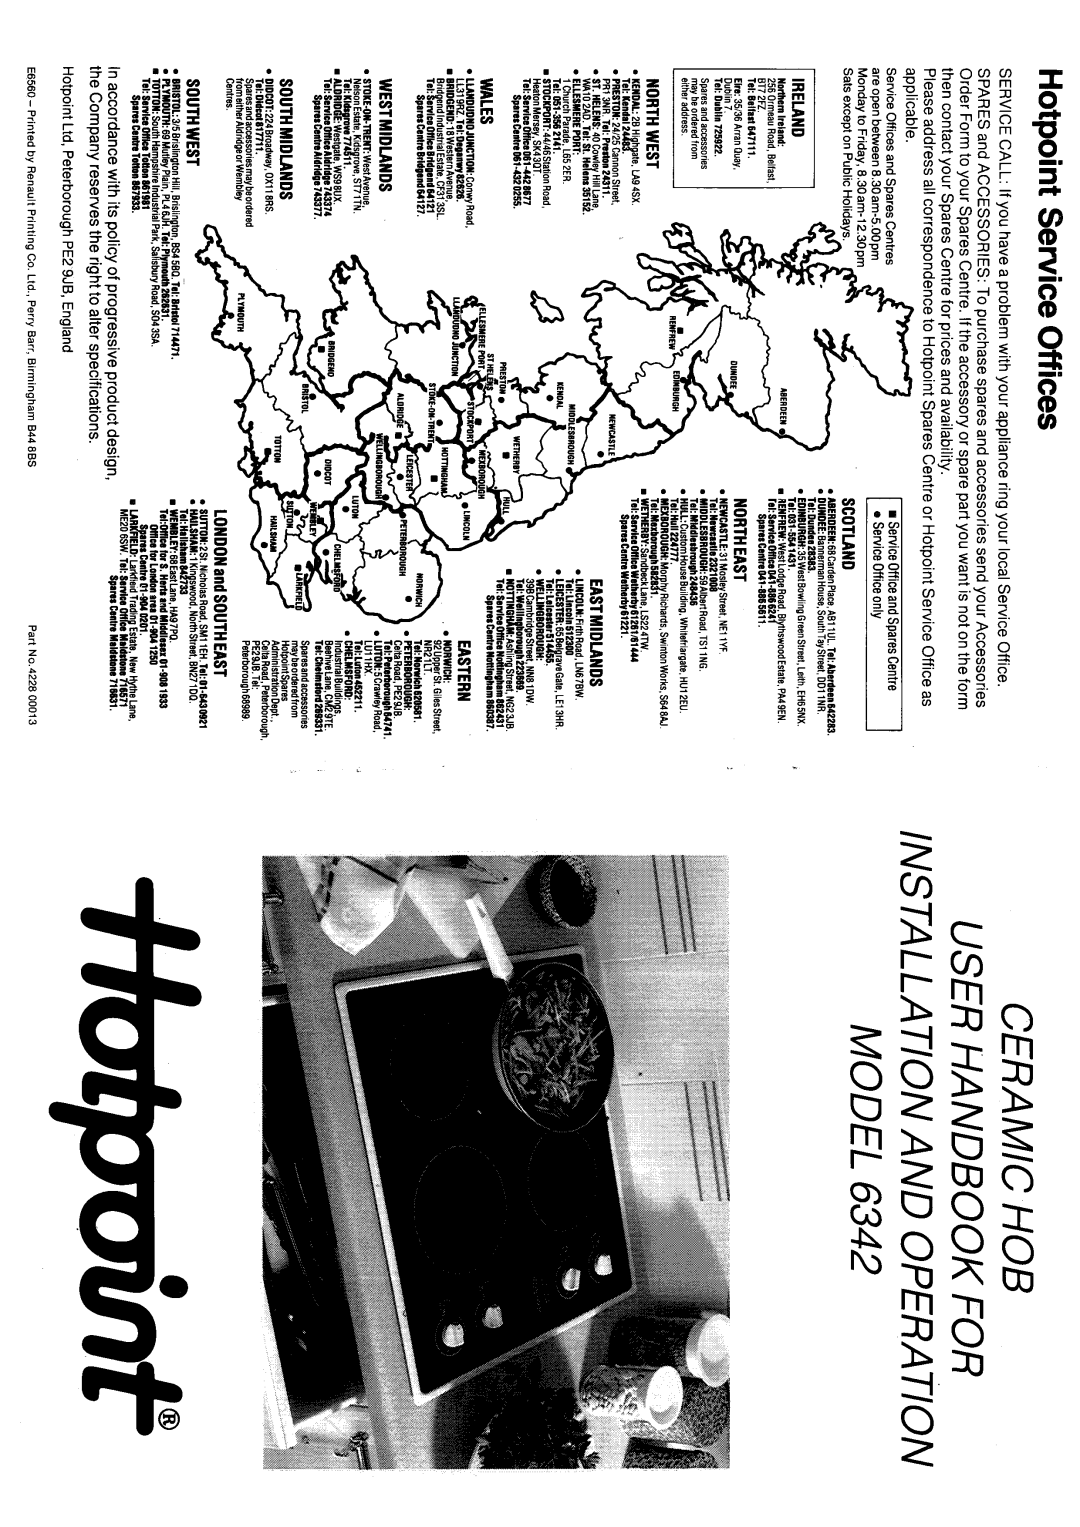 Hotpoint 6342 manual 